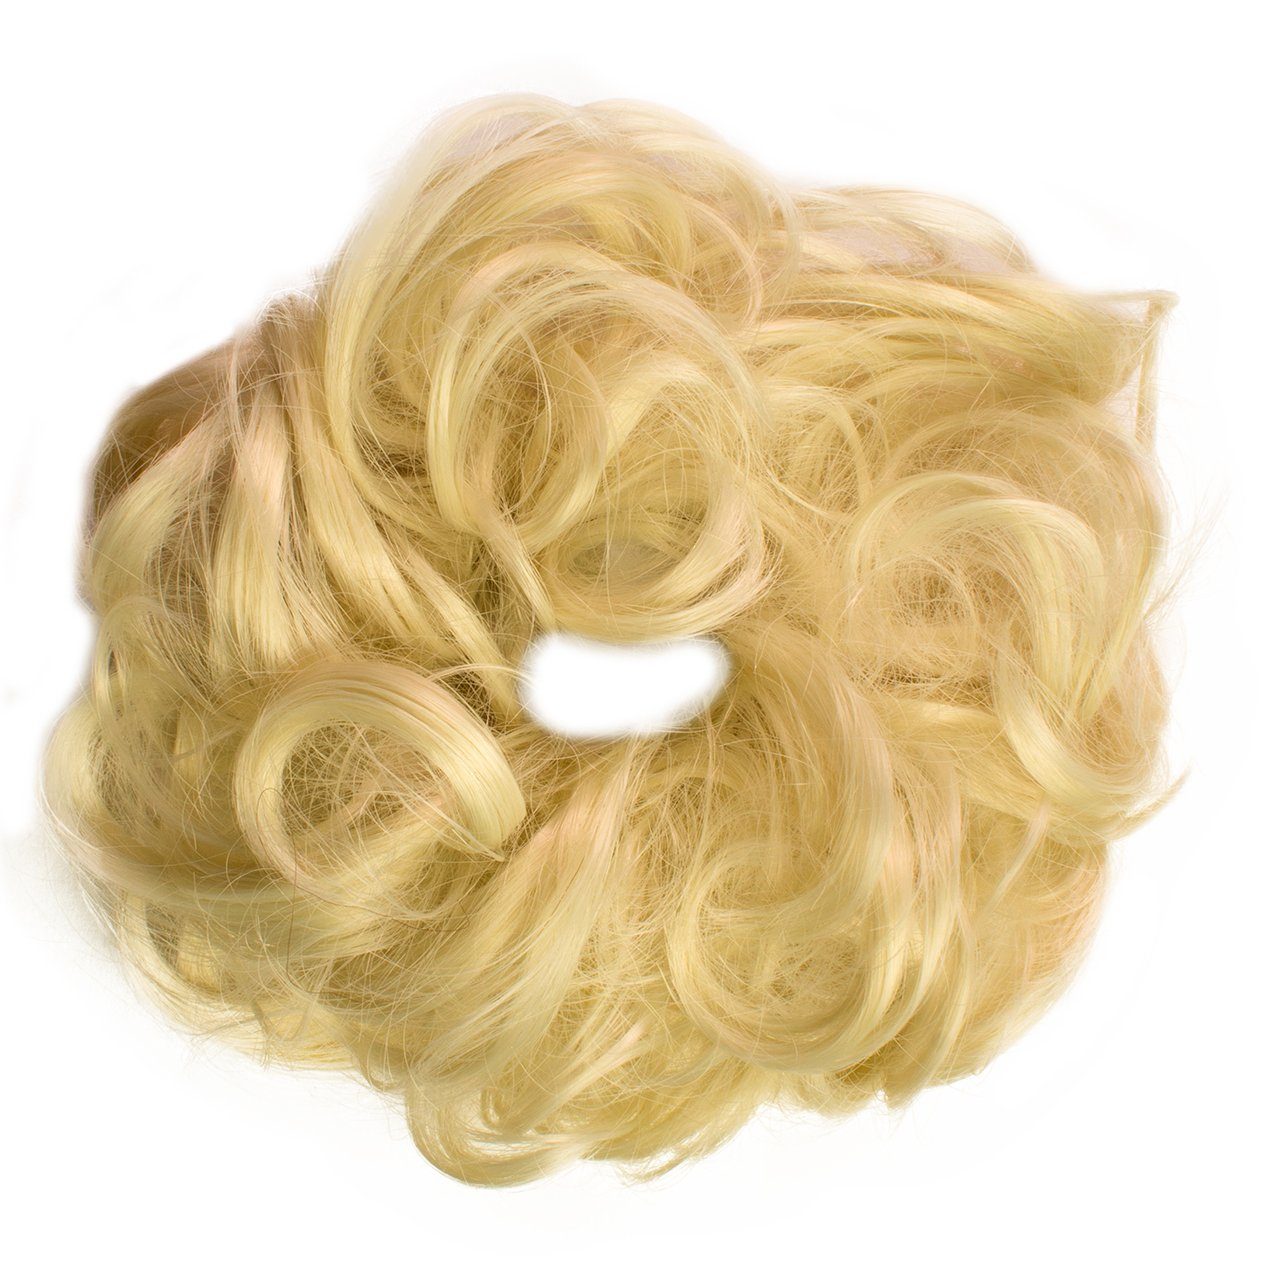 S-15 Chignon aus Haarknoten Kunsthaar-Extension hair2heart Kunsthaar